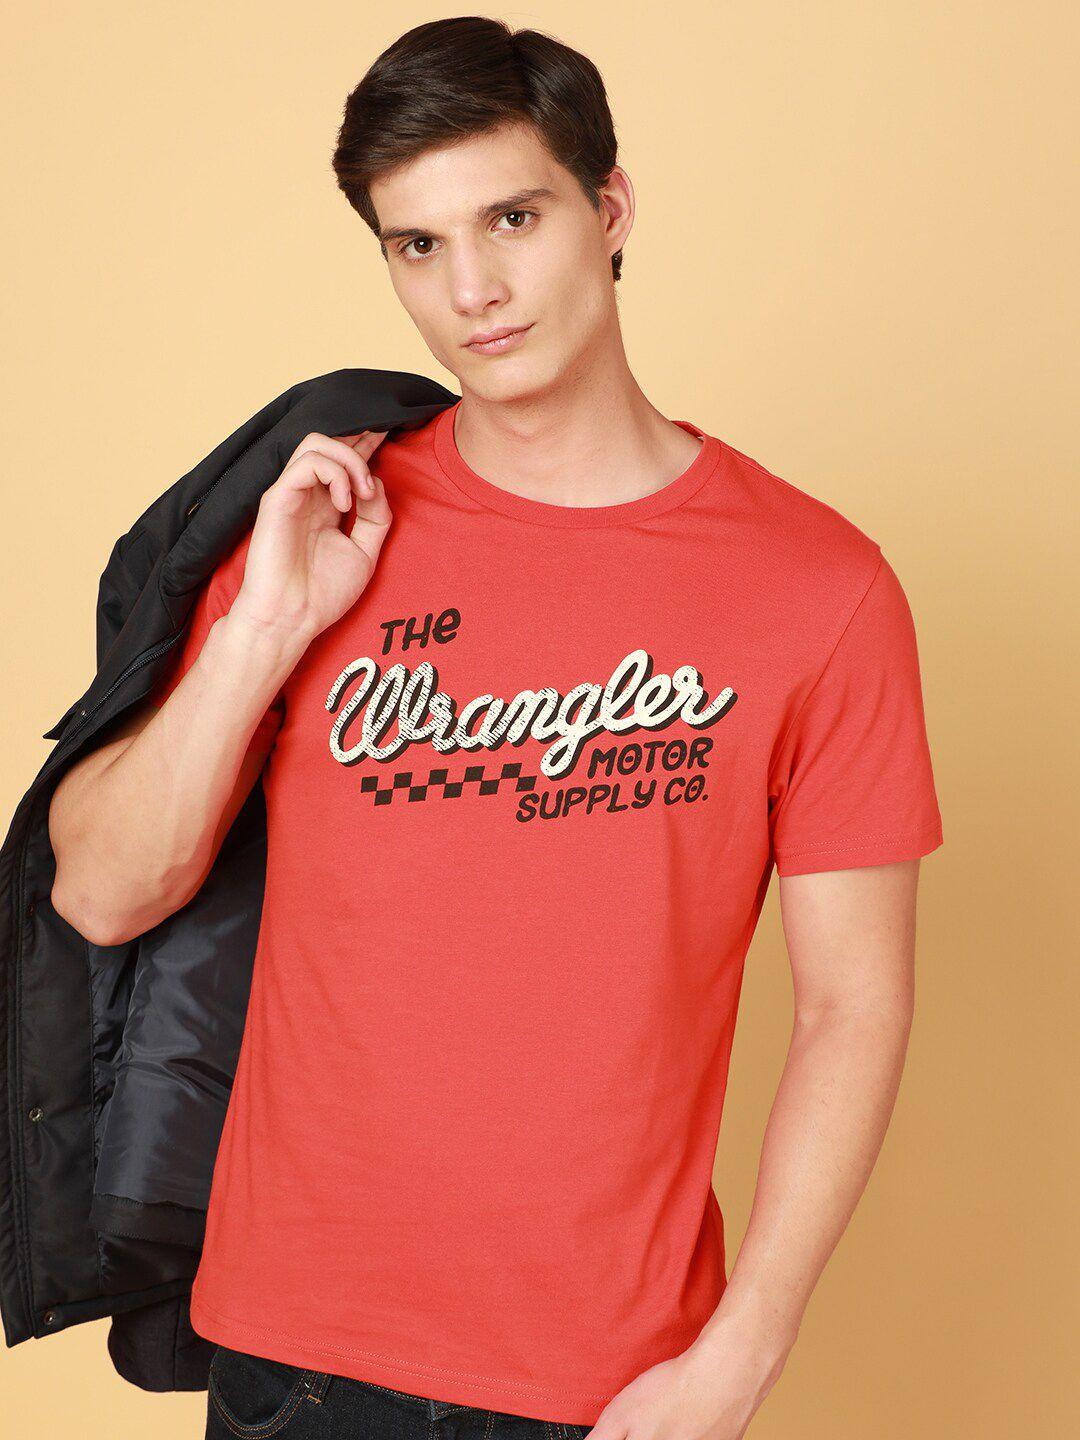 wrangler typography printed cotton t-shirt